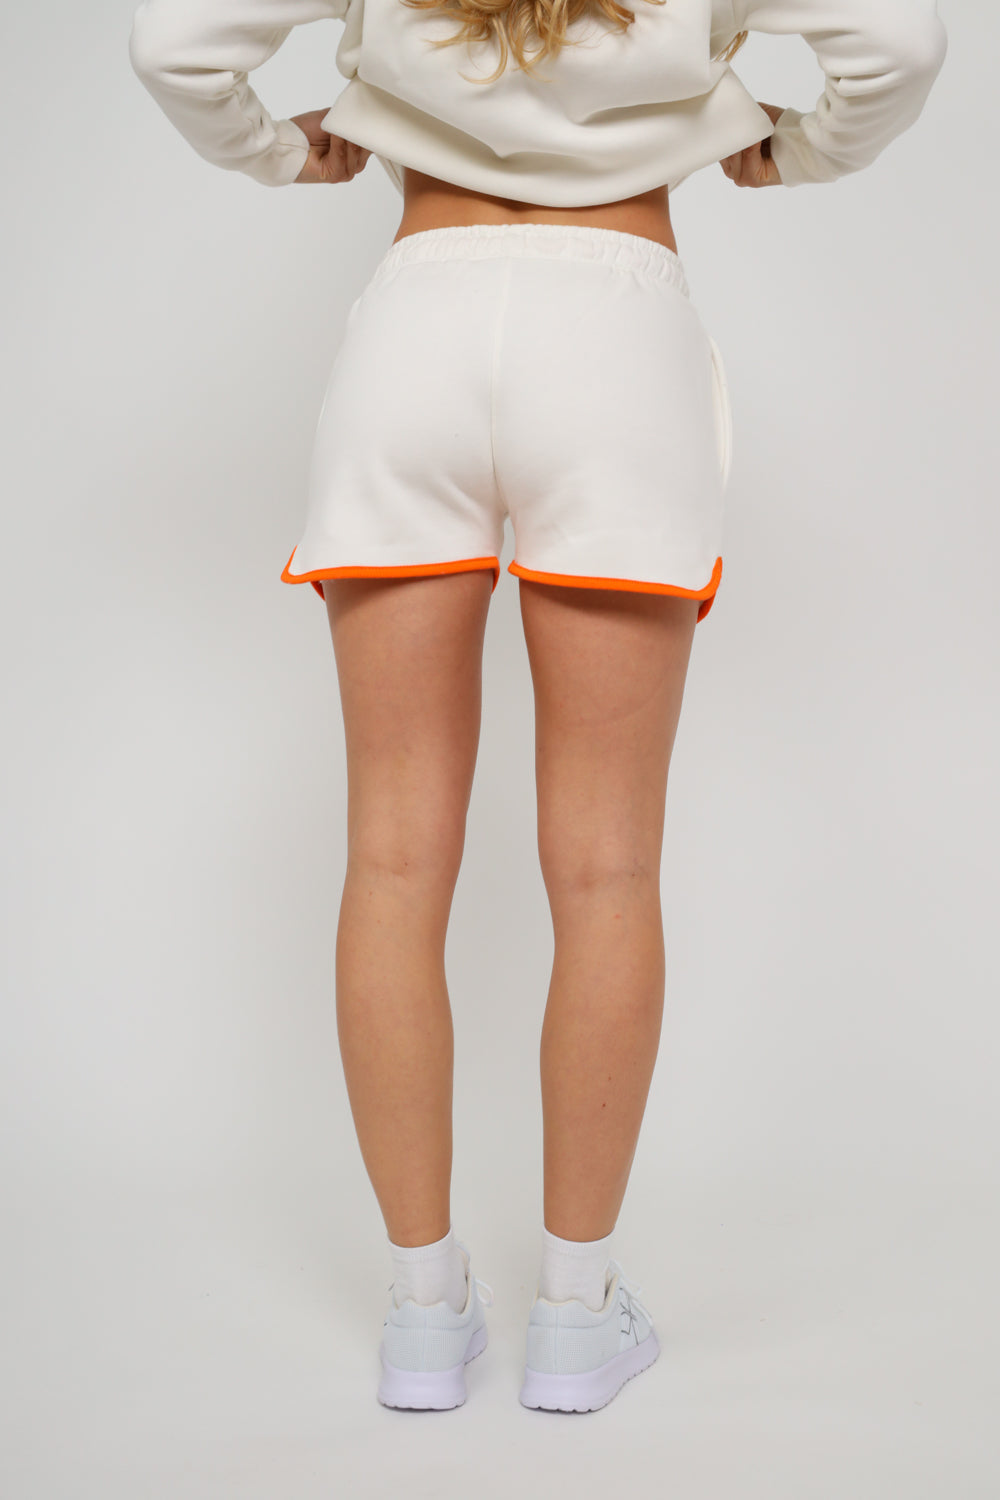 Validate Nyah White Shorts | Validate Fashion Women's Shorts | Hertfordshire